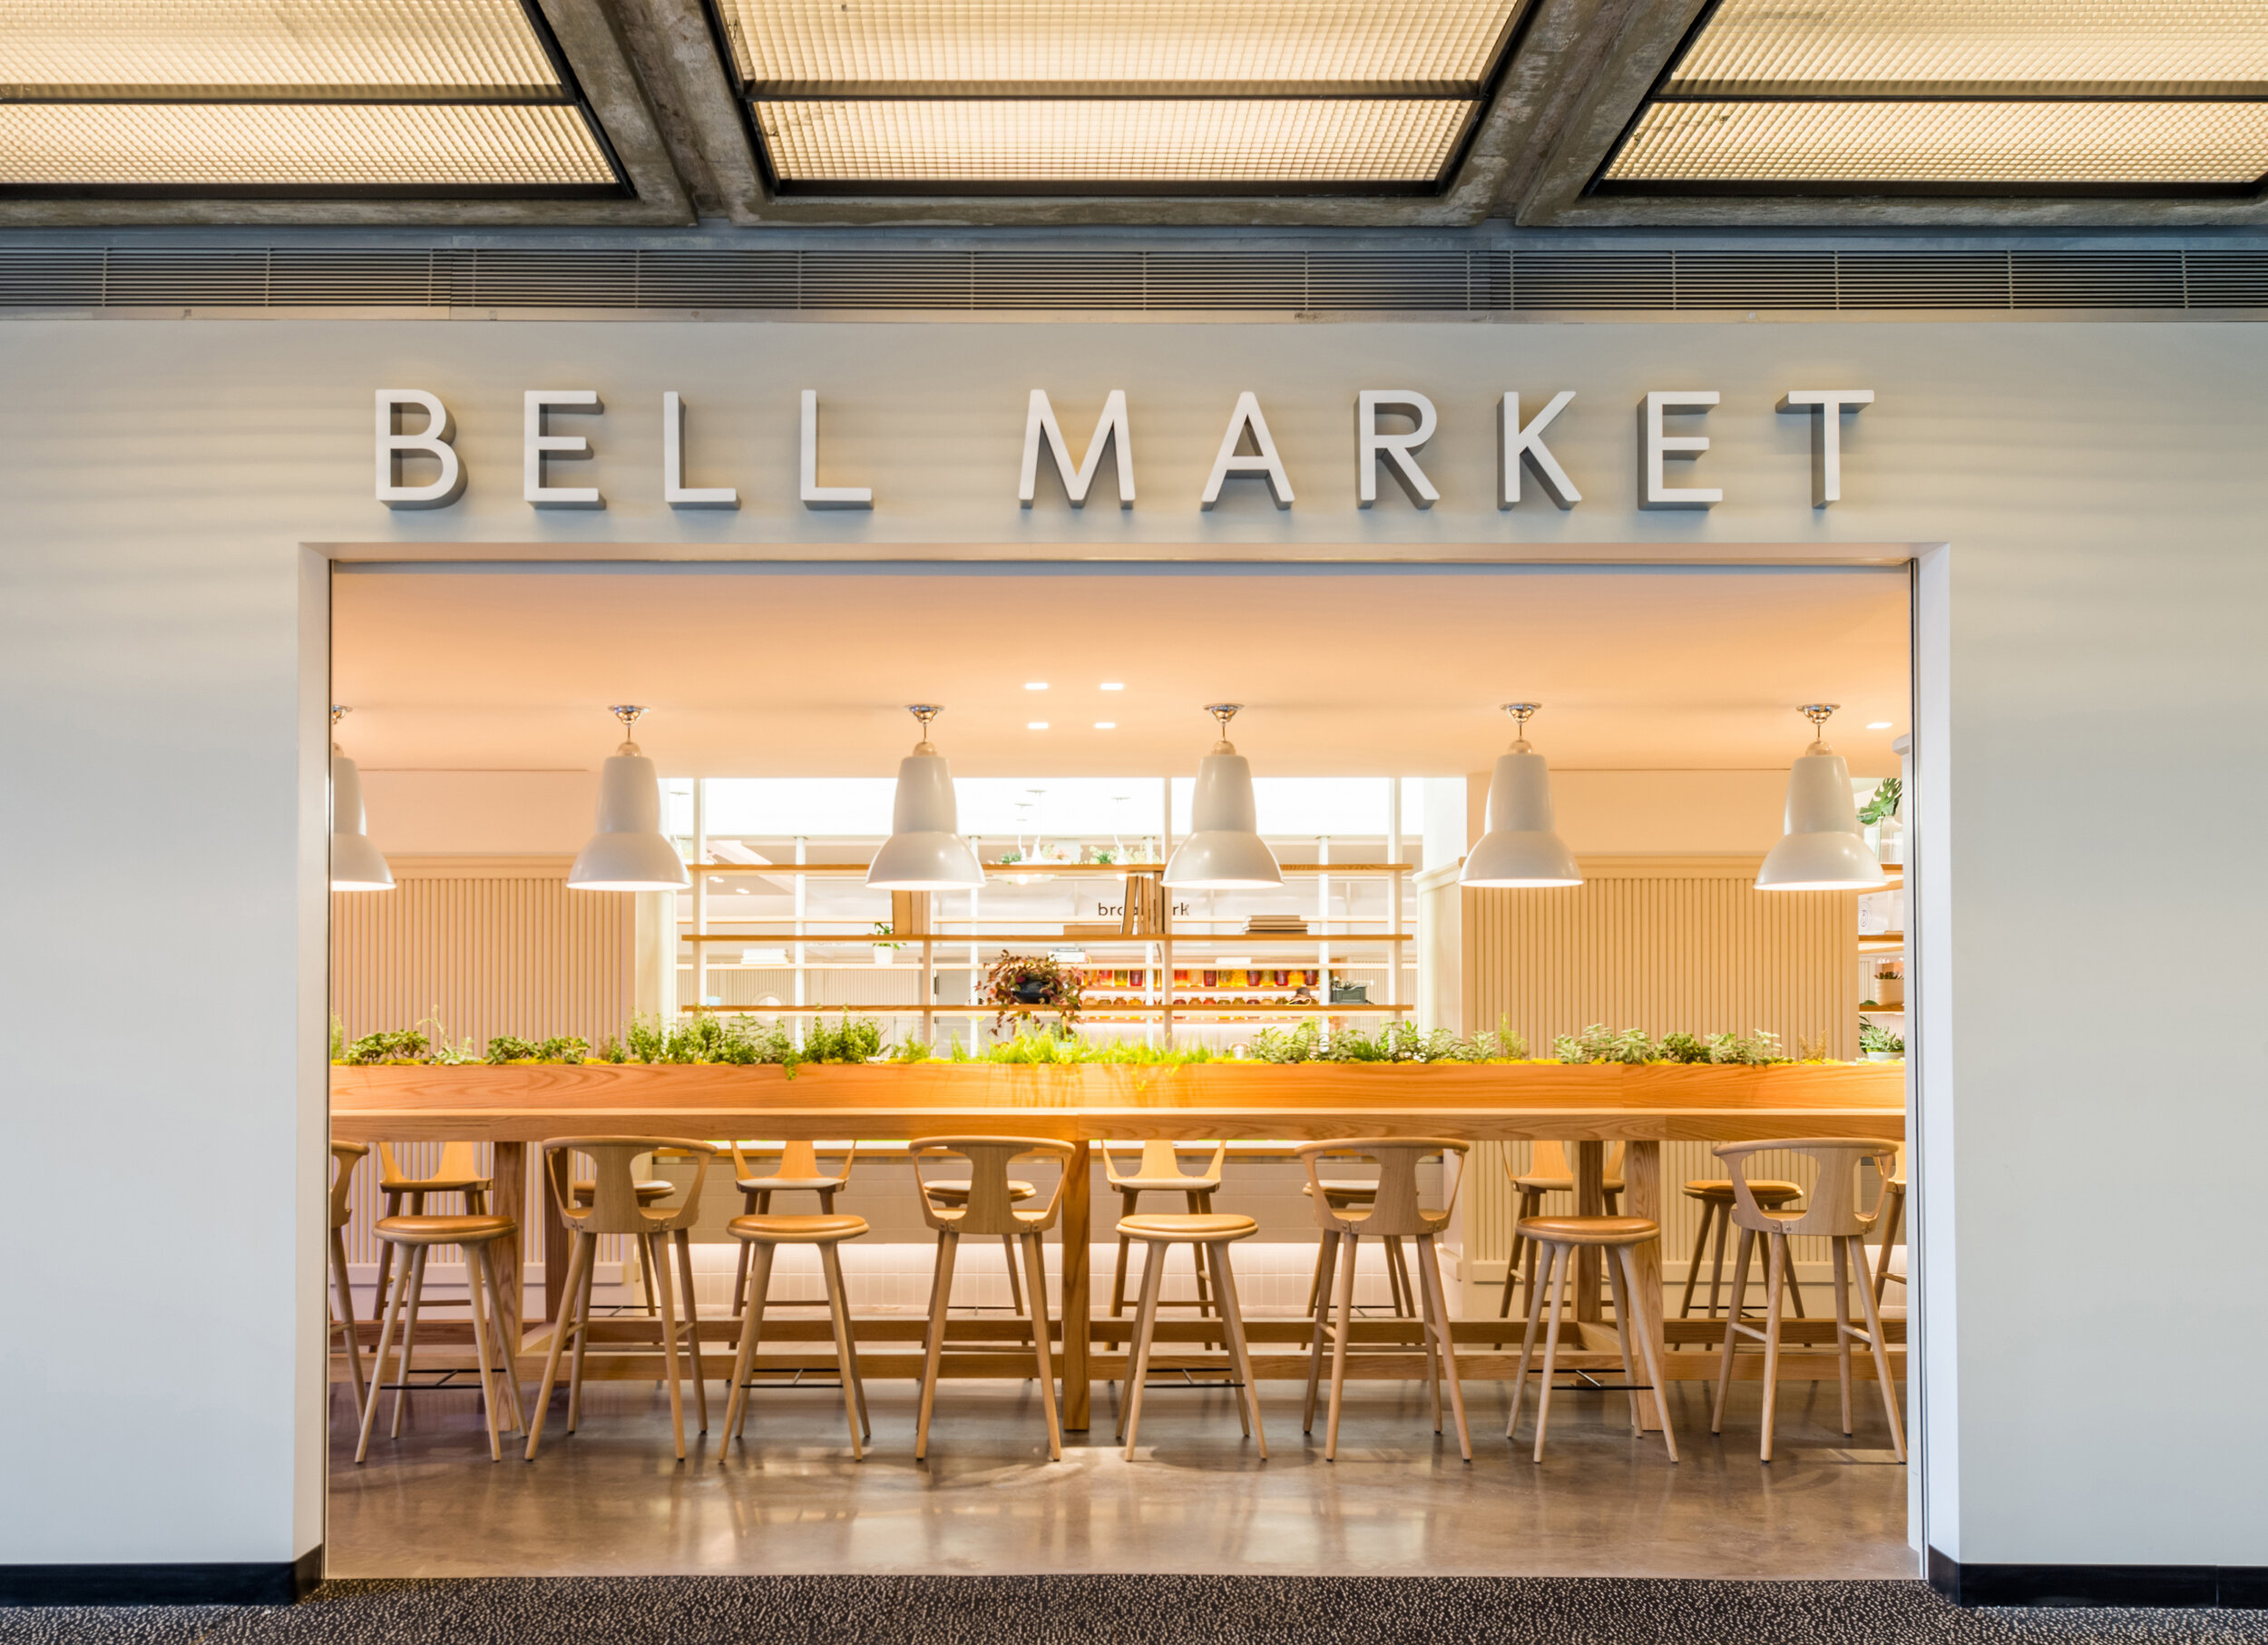 Bell Market